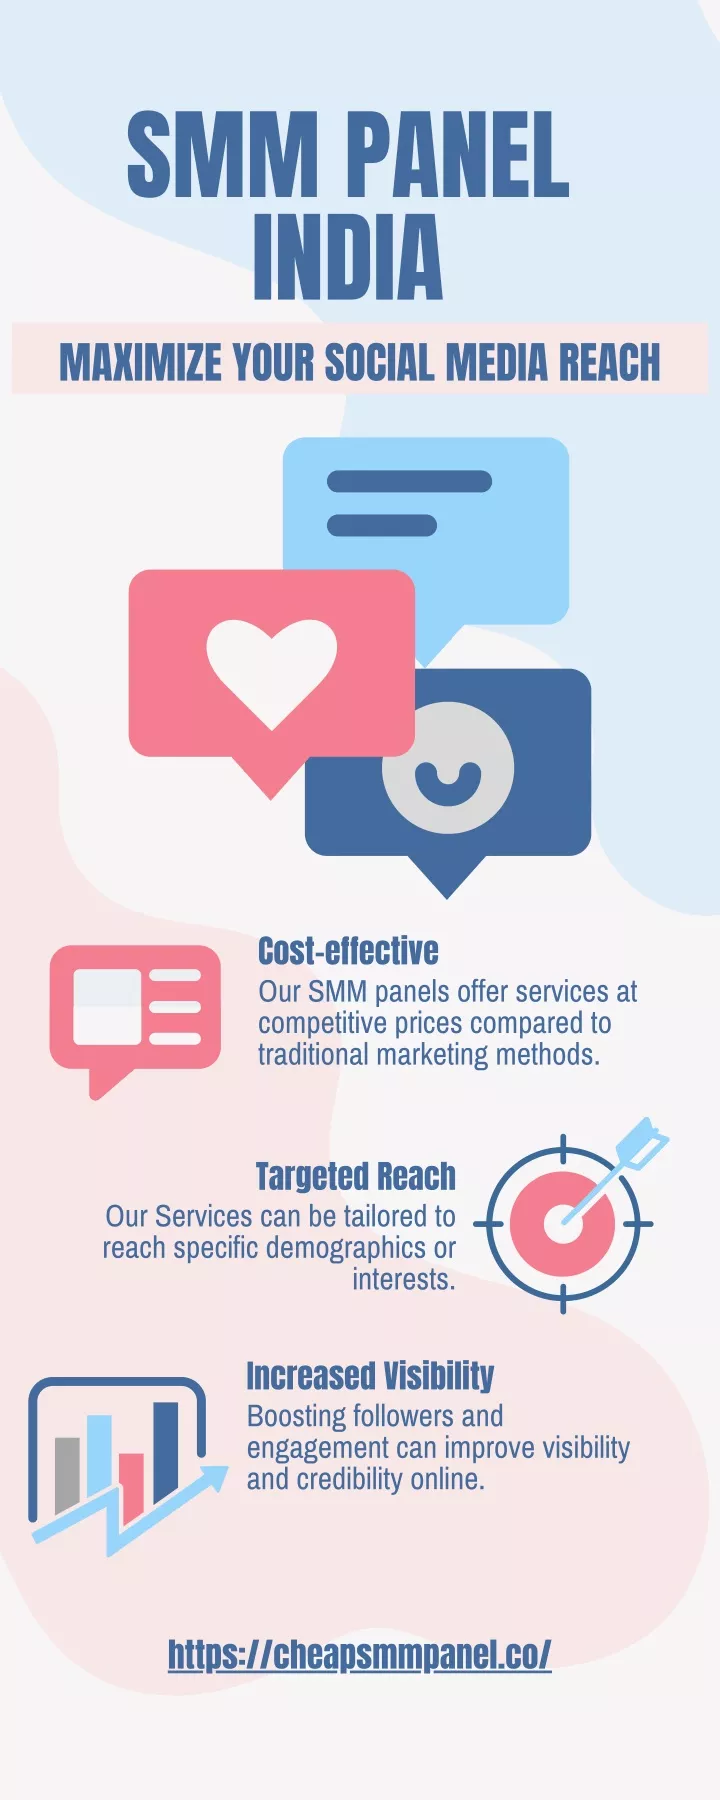 smm panel india maximize your social media reach